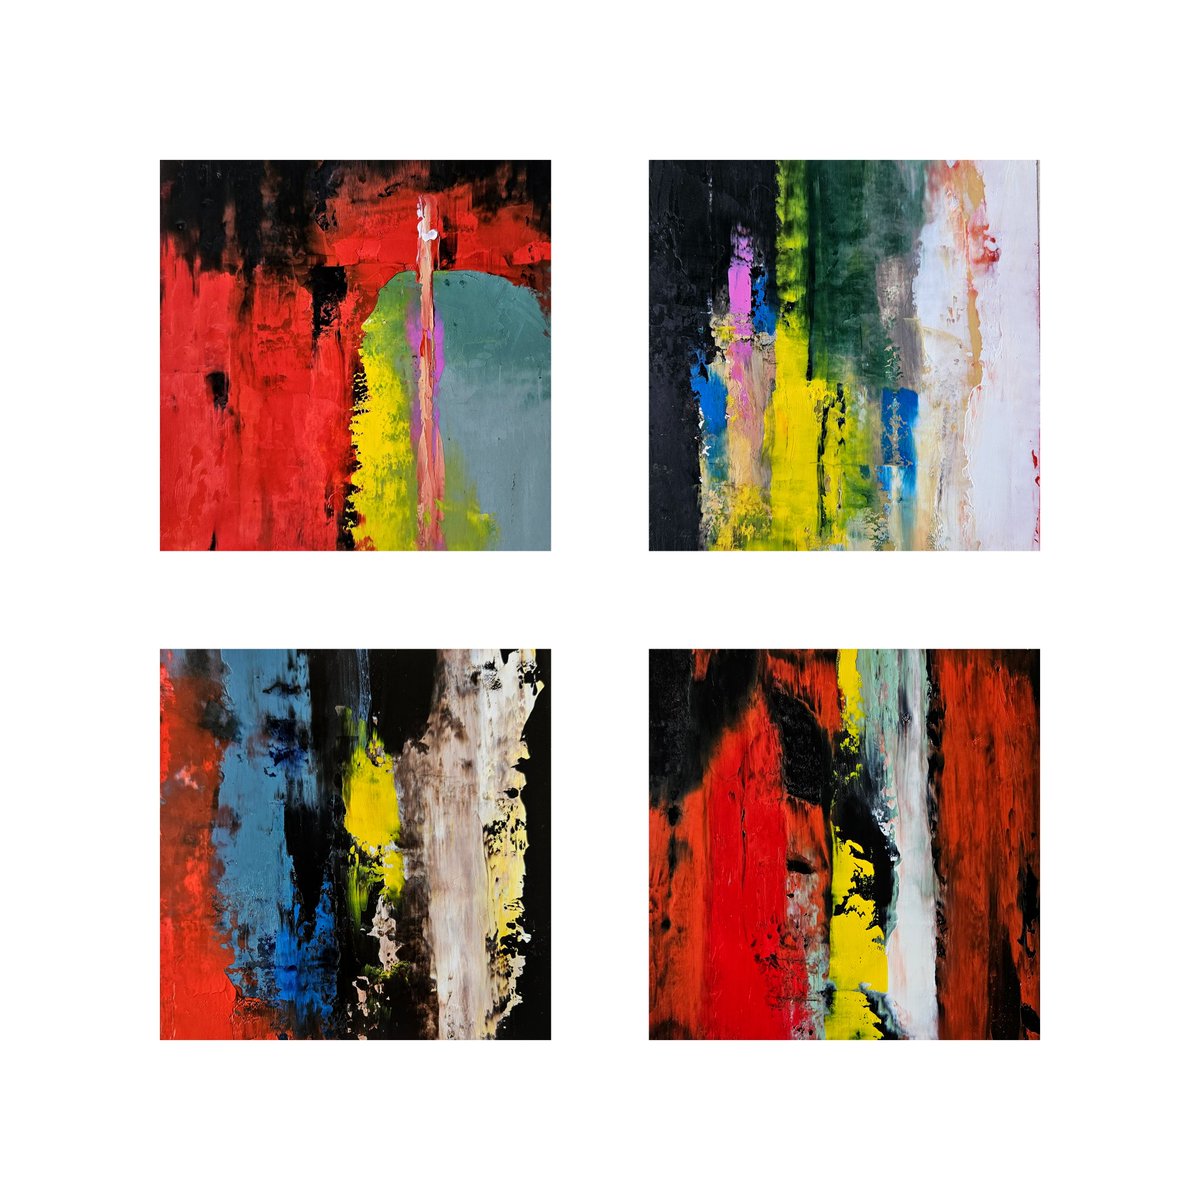 Gn ✨️💫🌜
#abstractart #Abstract #abstractpainting #abstractartist #ArtistOnTwitter #artwork #art #visualart #minipainting